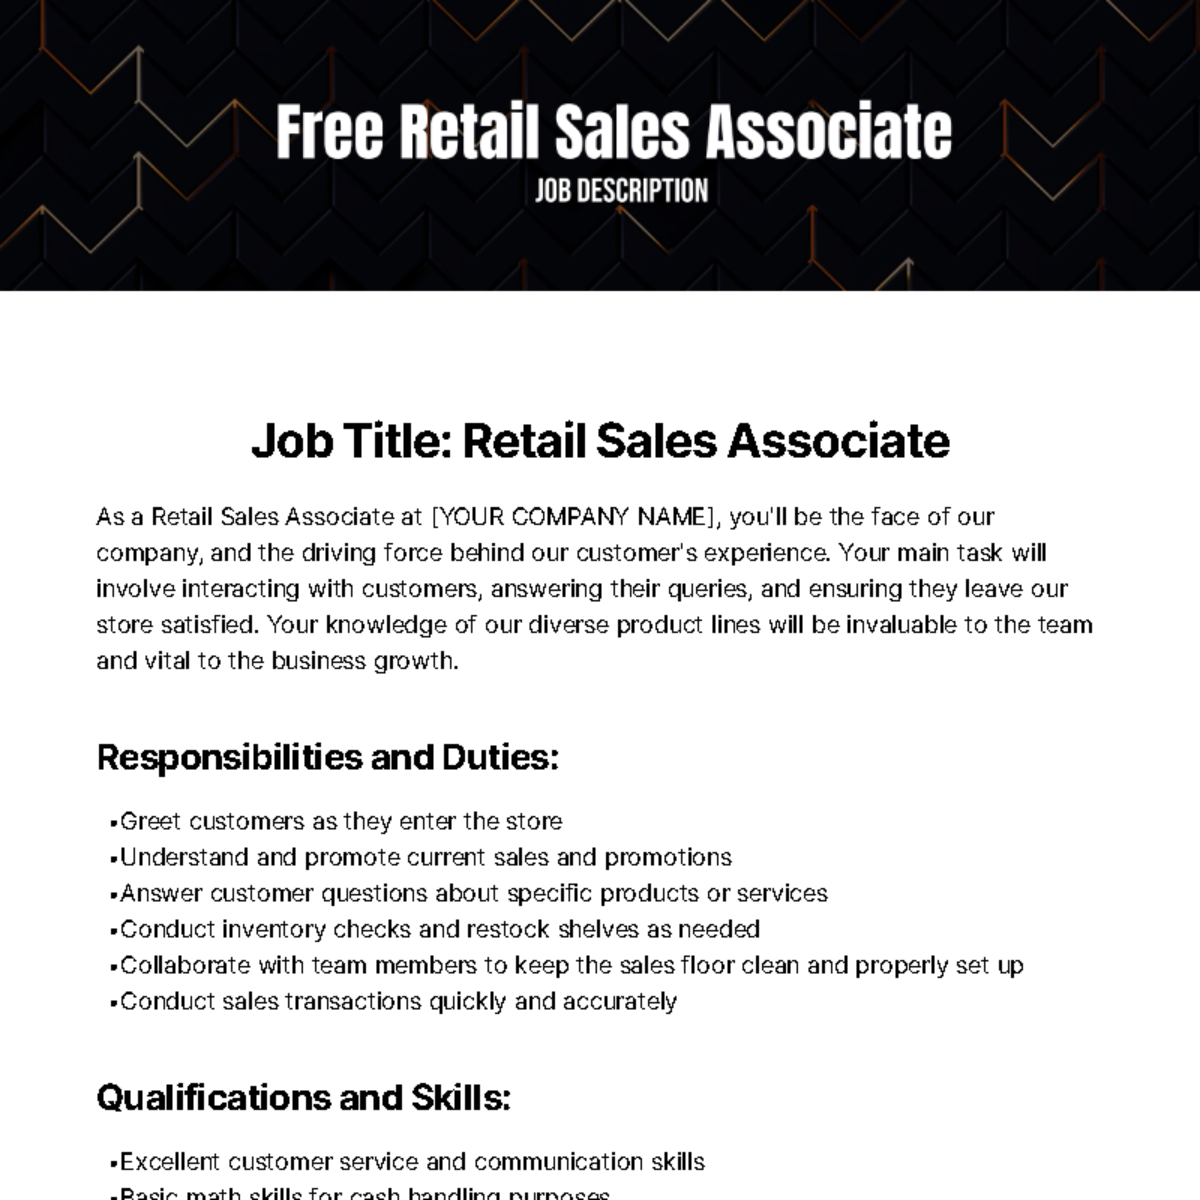 Free Retail Sales Associate Job Description Template